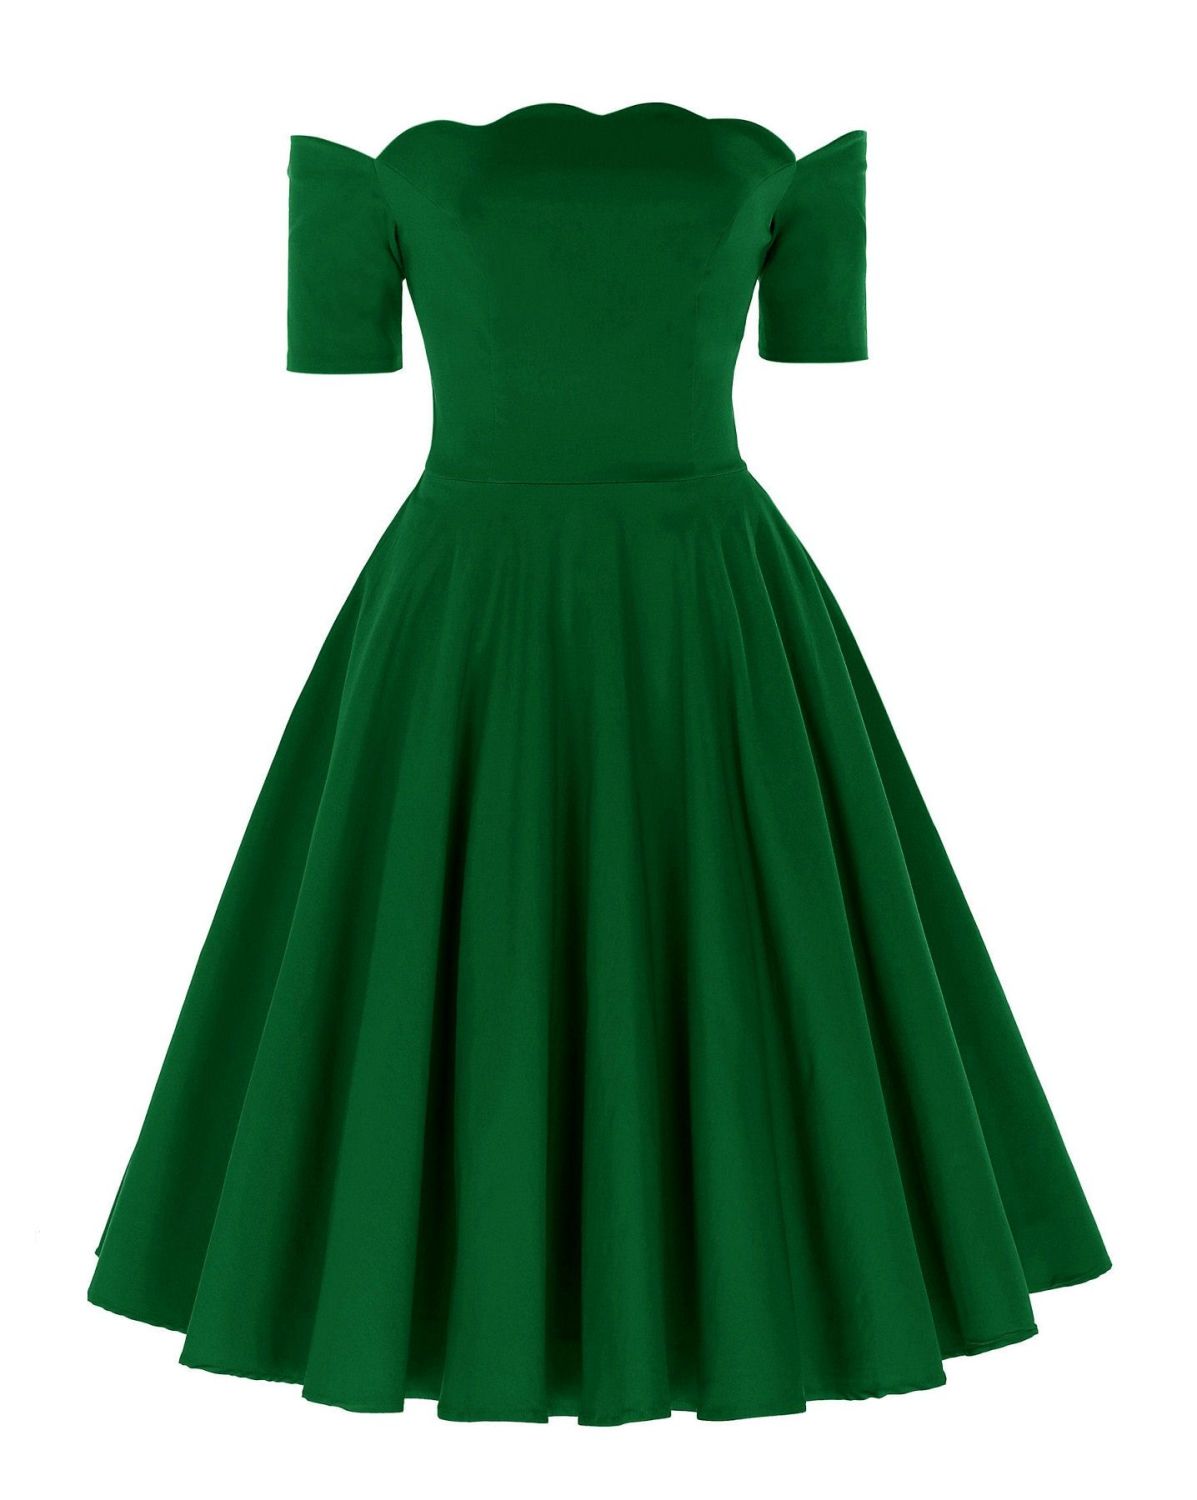 Liana luxury green off the shoulder full skirt vintage